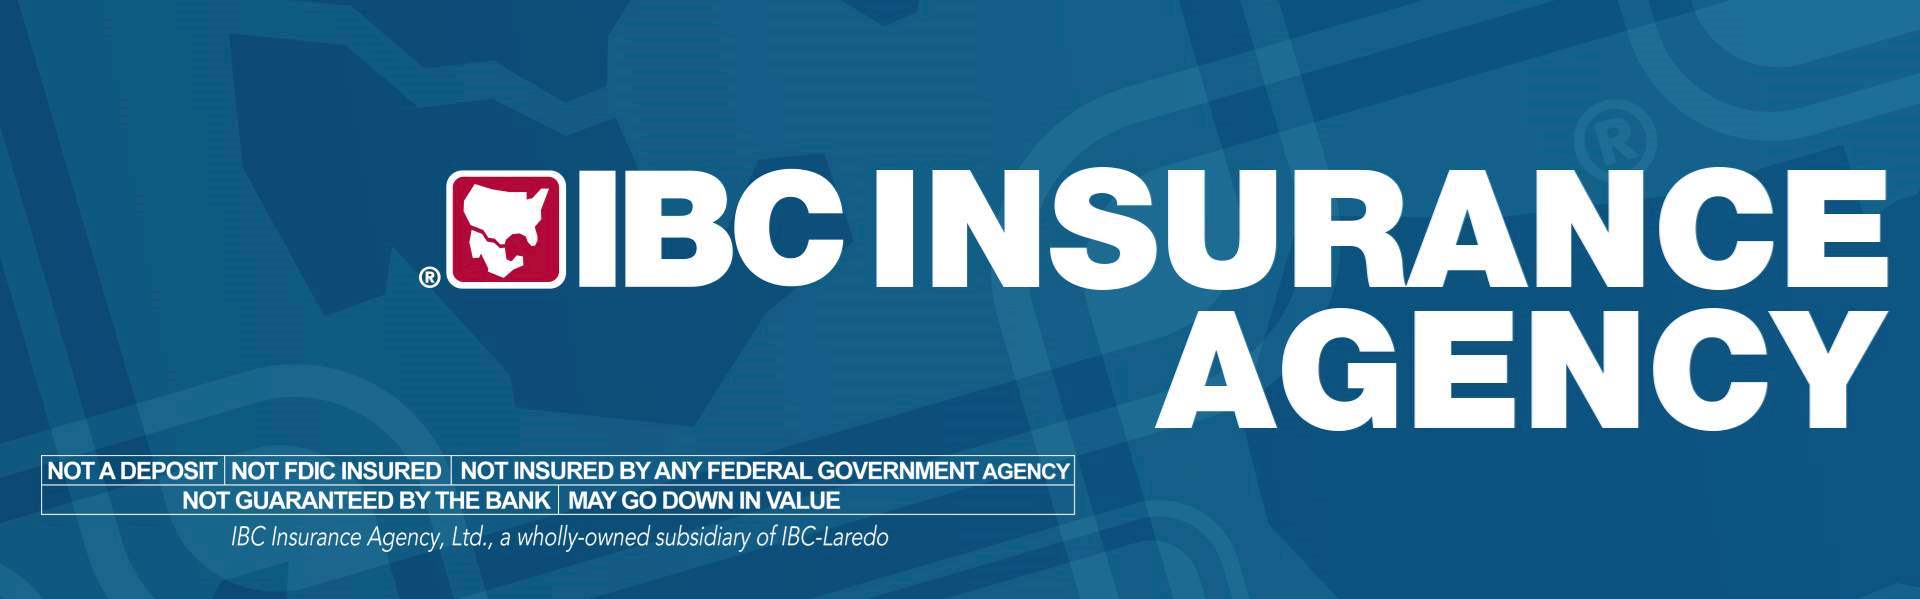 IBC Bank Business Insurance